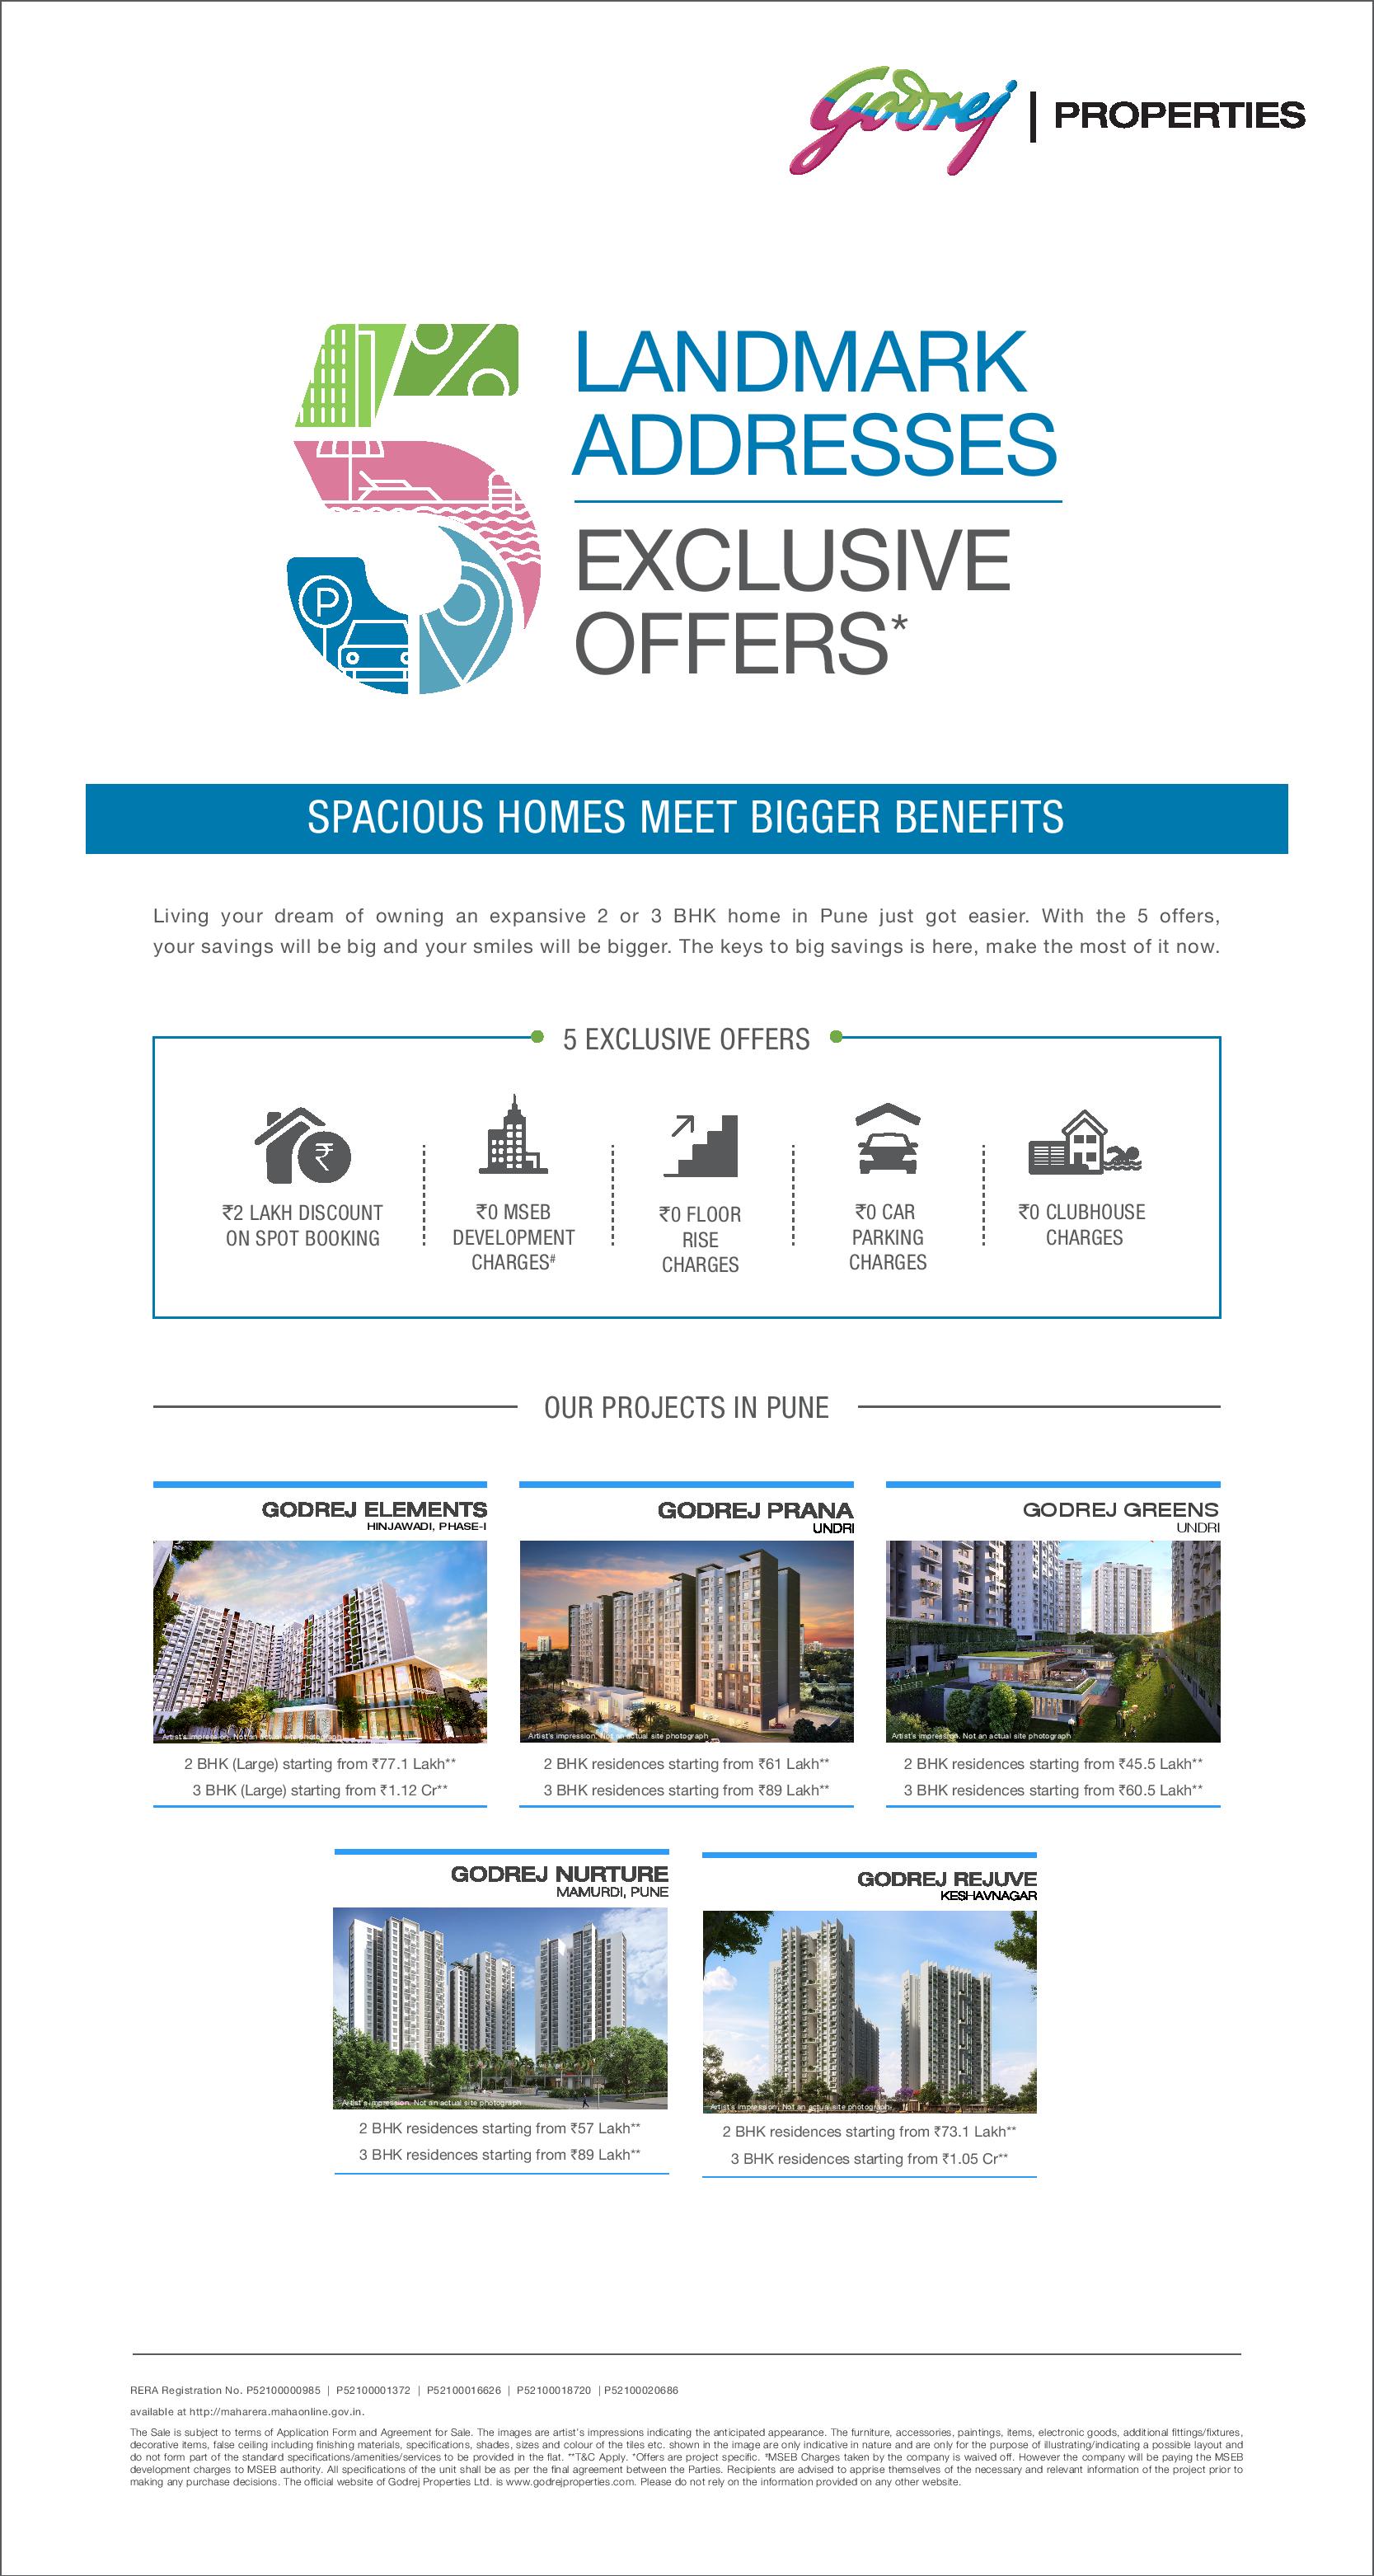 5 Godrej Properties landmark addresses exclusive offers in Pune Update